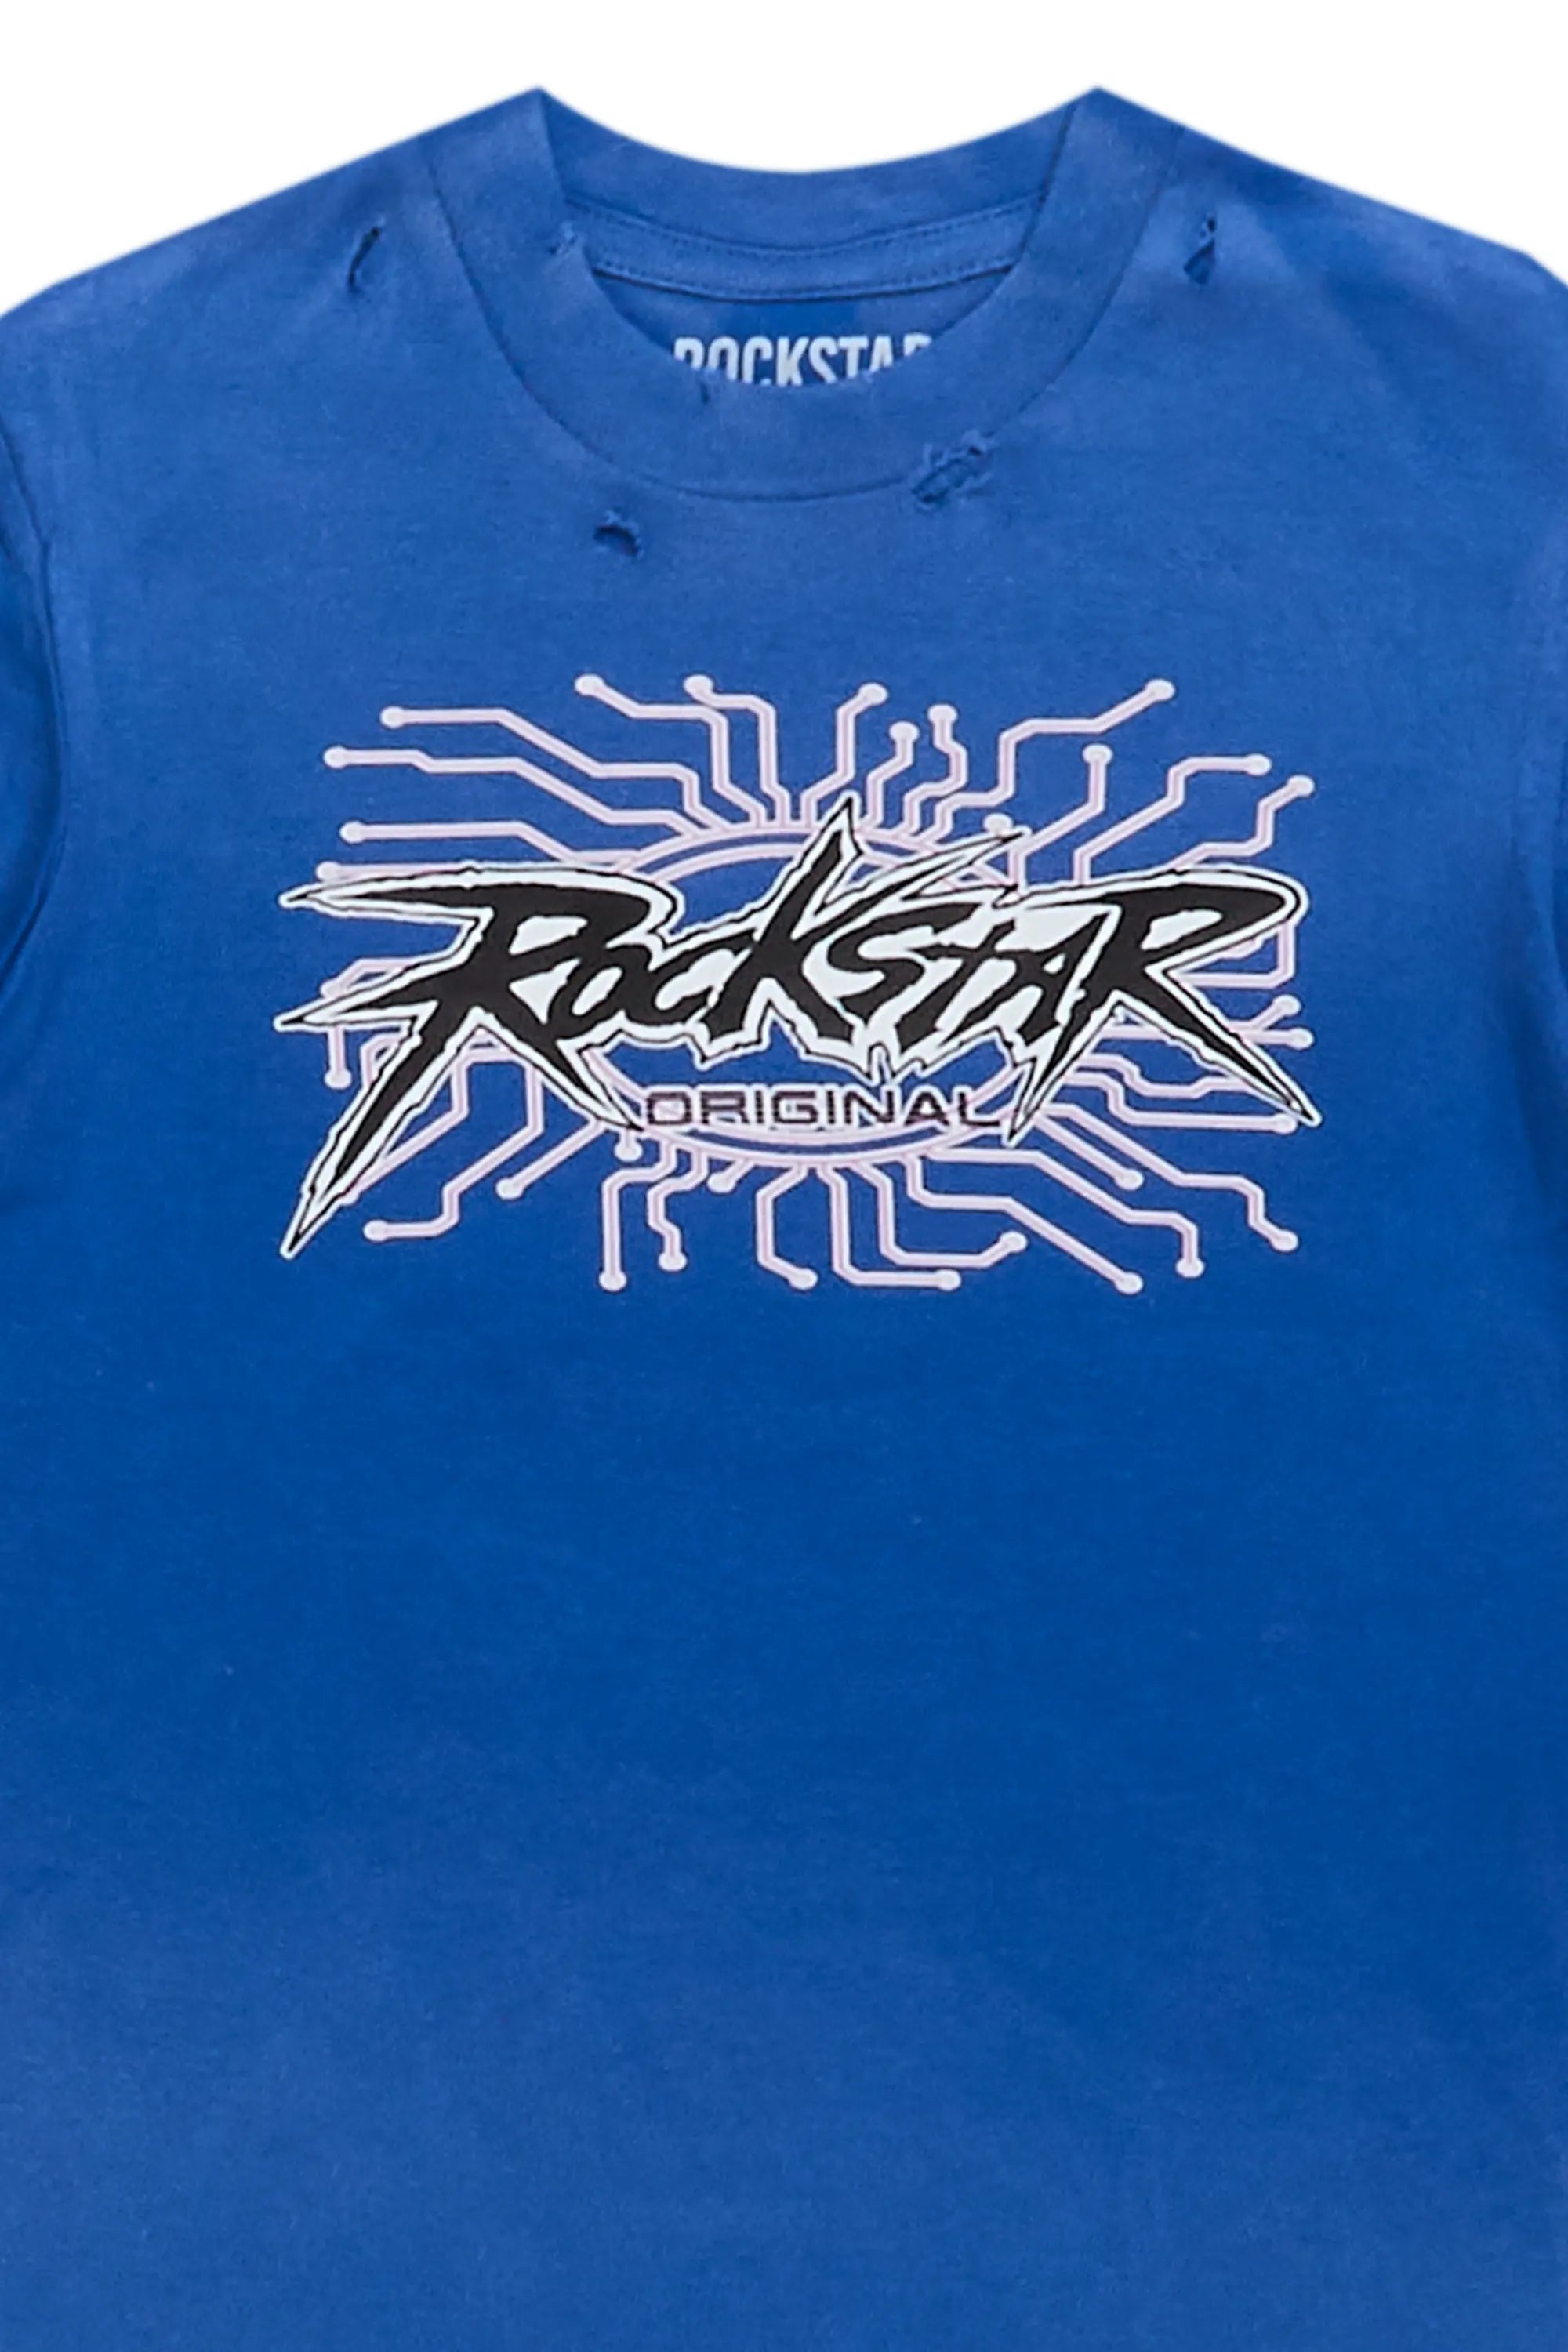 Boys Race Royal Blue Graphic T-Shirt